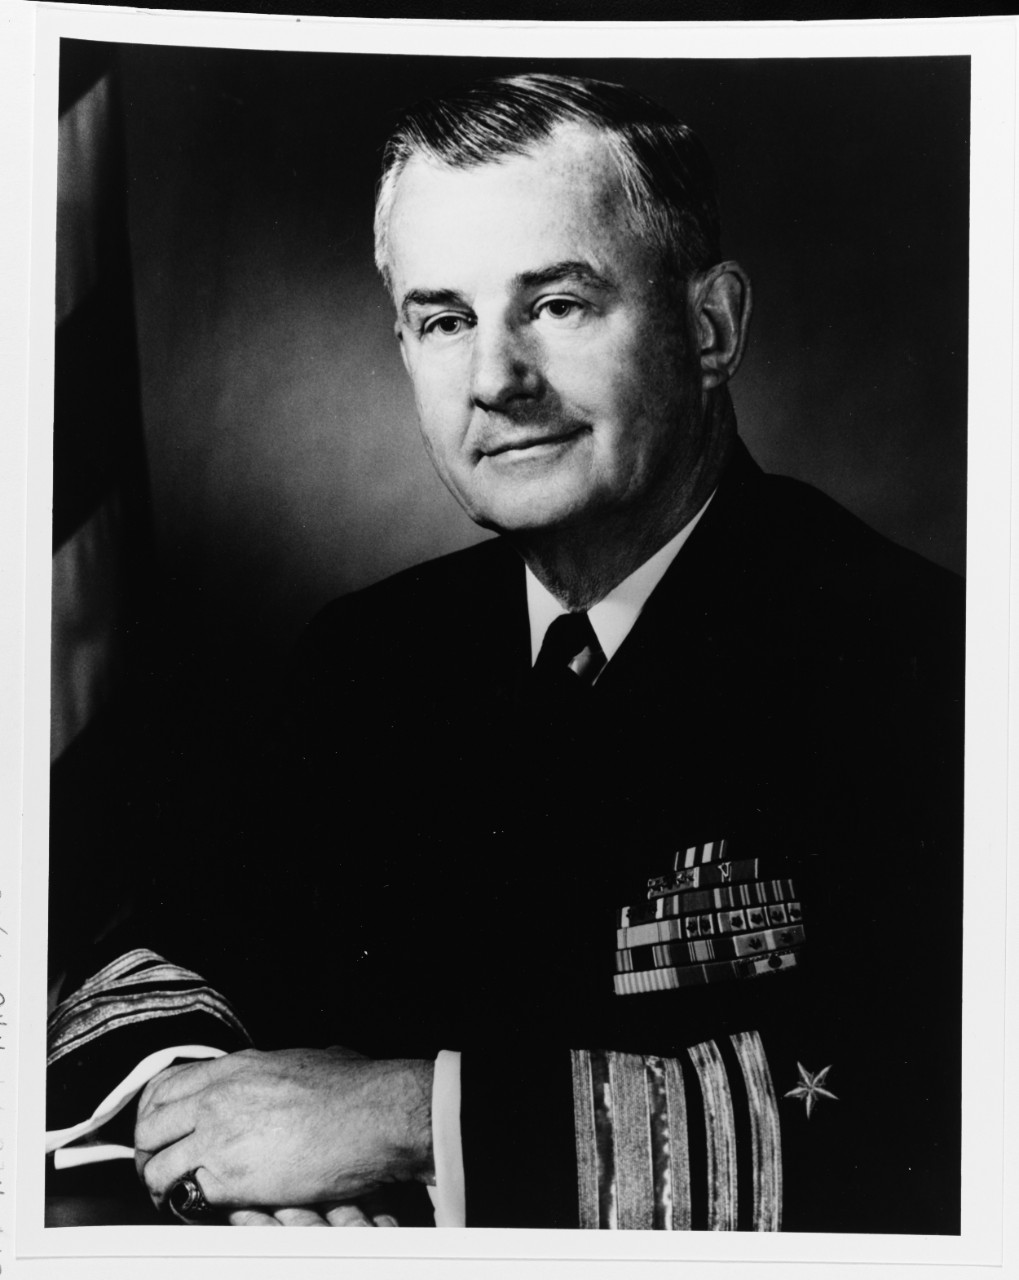 Vice Admiral William R. Smedberg III, USN